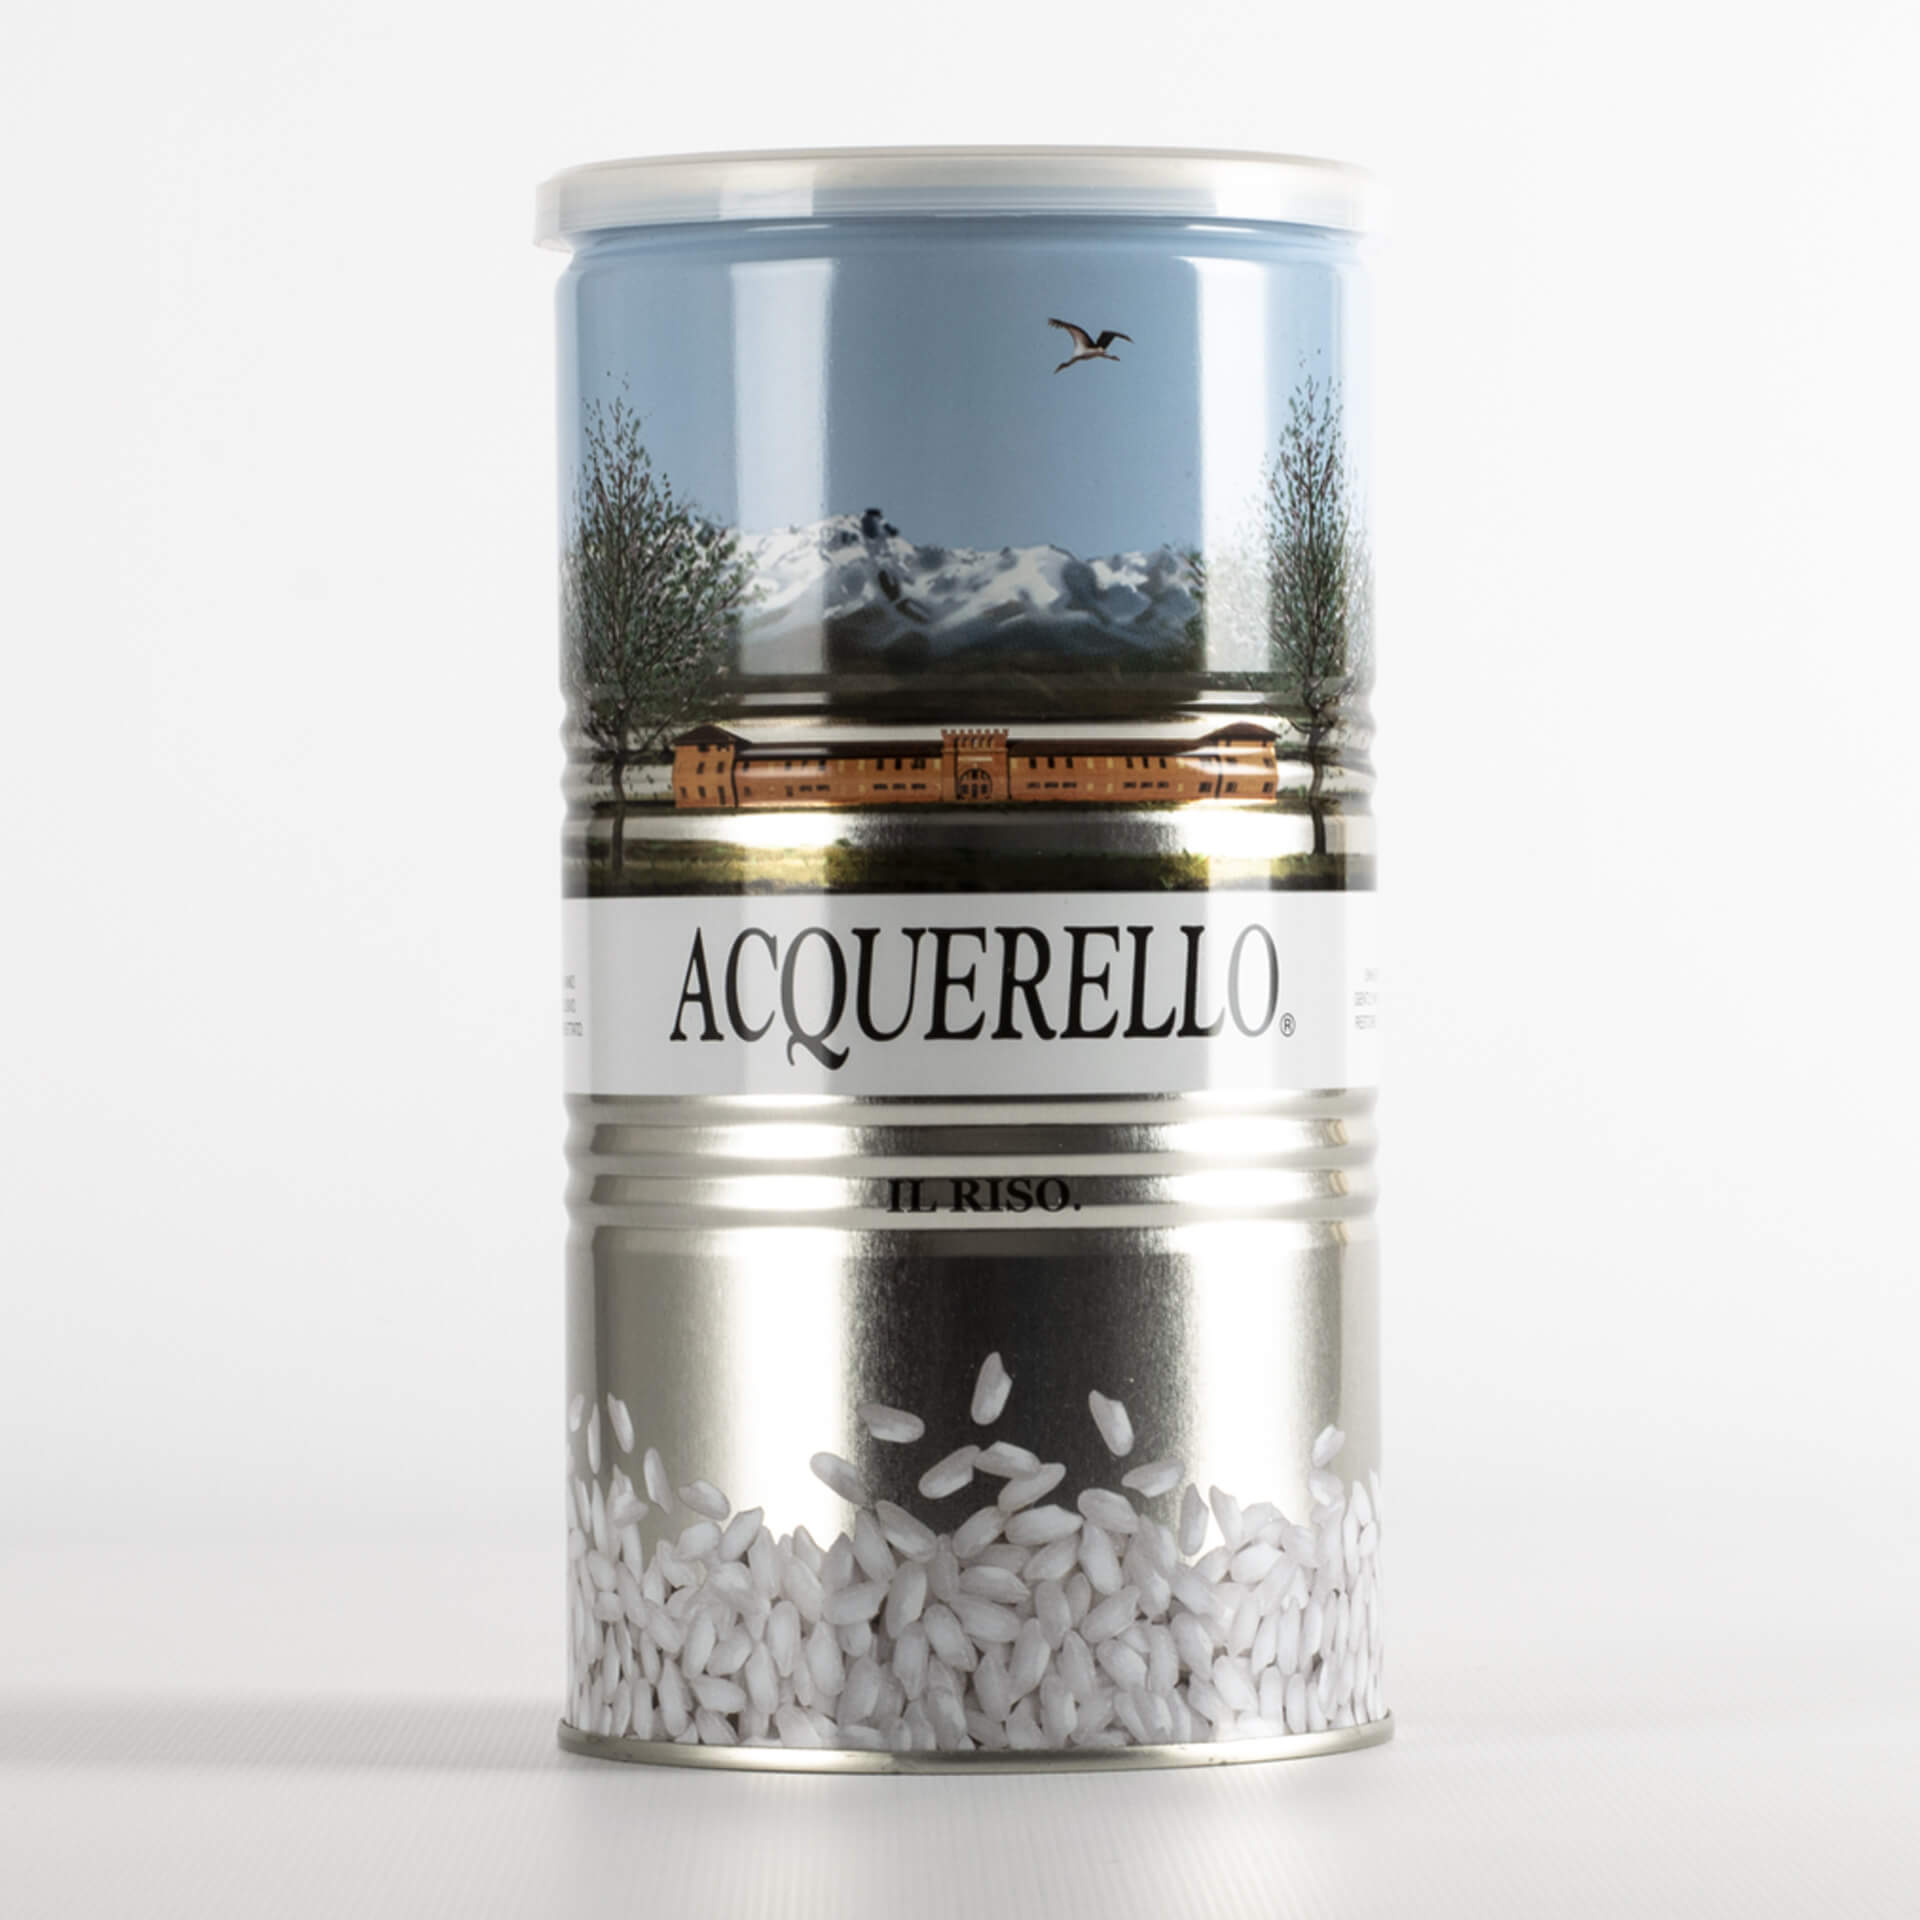 Acquerello Rice 1 Year Maturation - 1kg